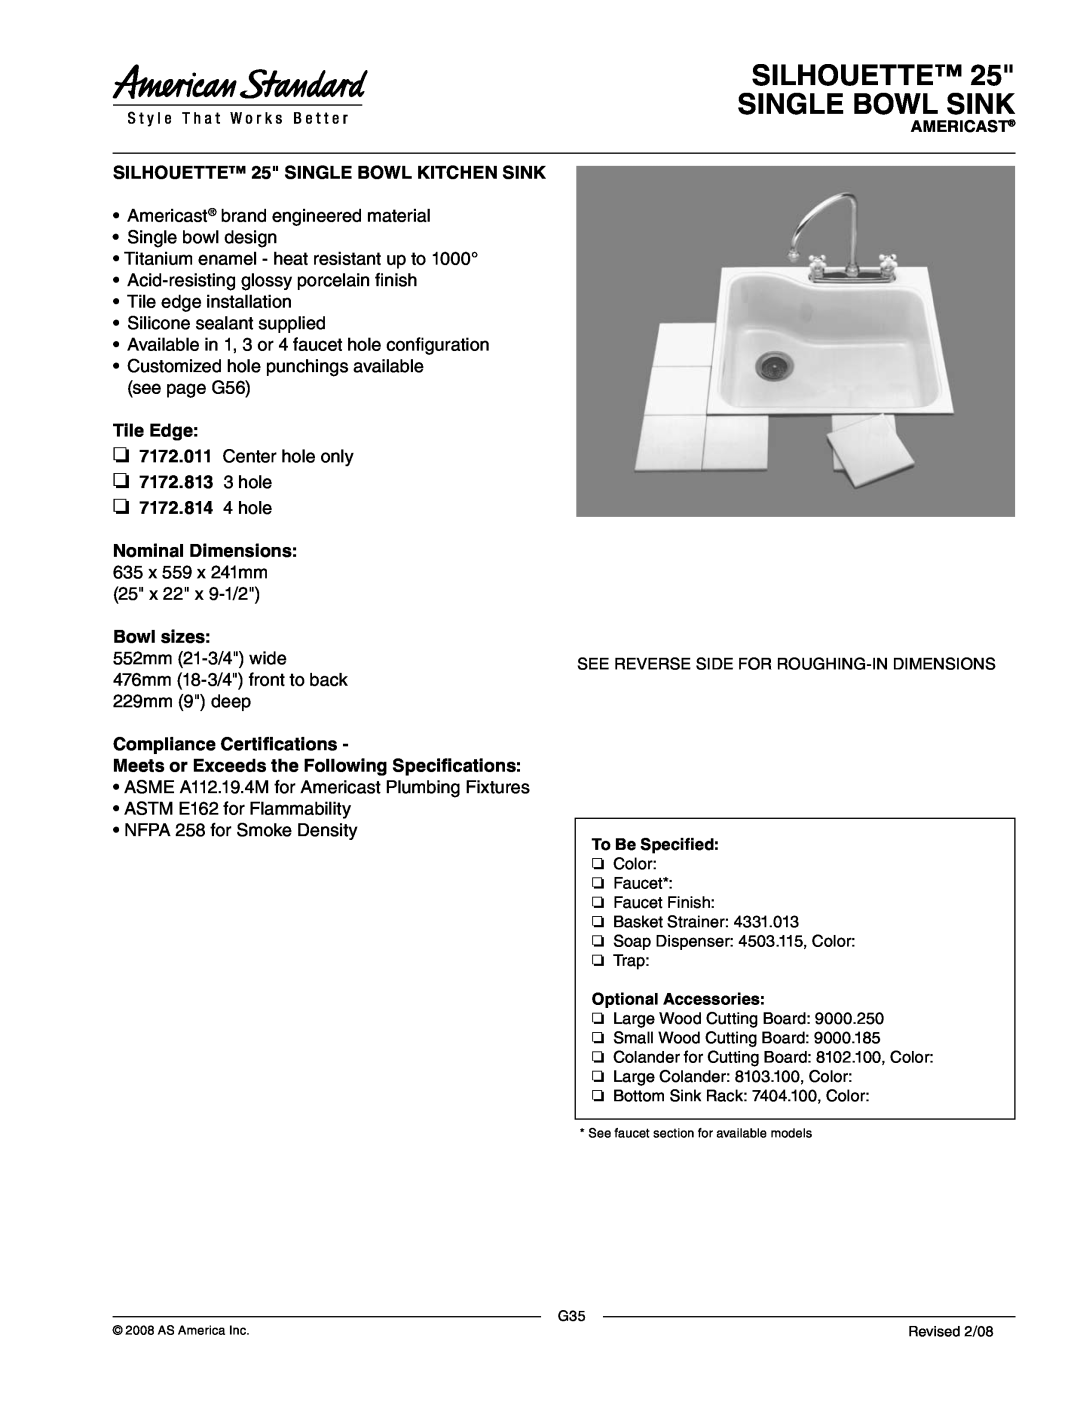 American Standard dimensions Silhouette Single Bowl Sink, SILHOUETTE 25 SINGLE BOWL KITCHEN SINK, Tile Edge, Bowl sizes 